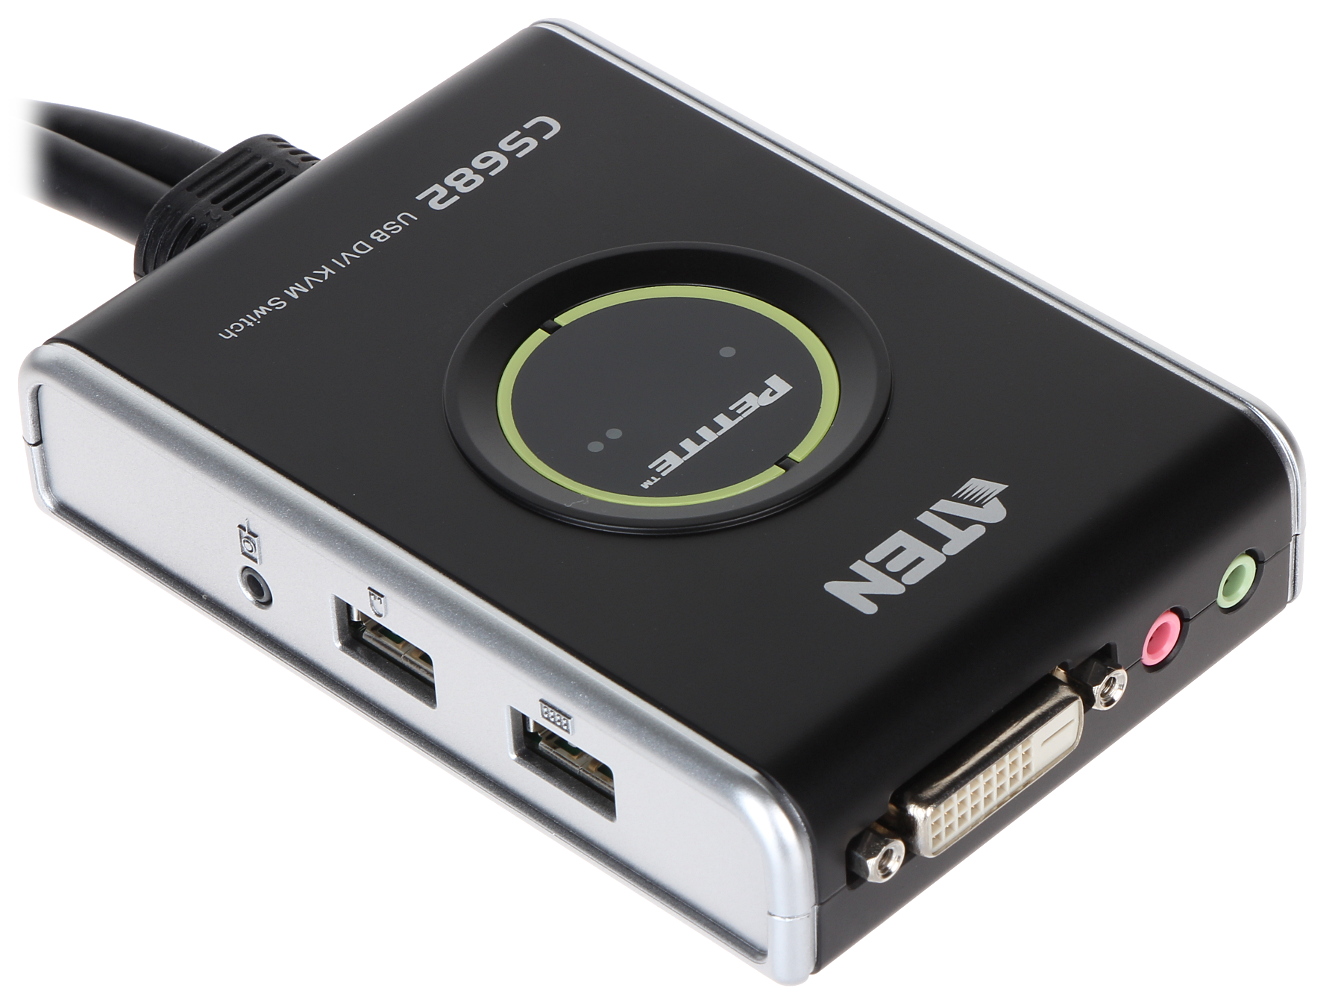 DVI + USB SWITCH CS-682 - DVI Switches and Splitters - Delta